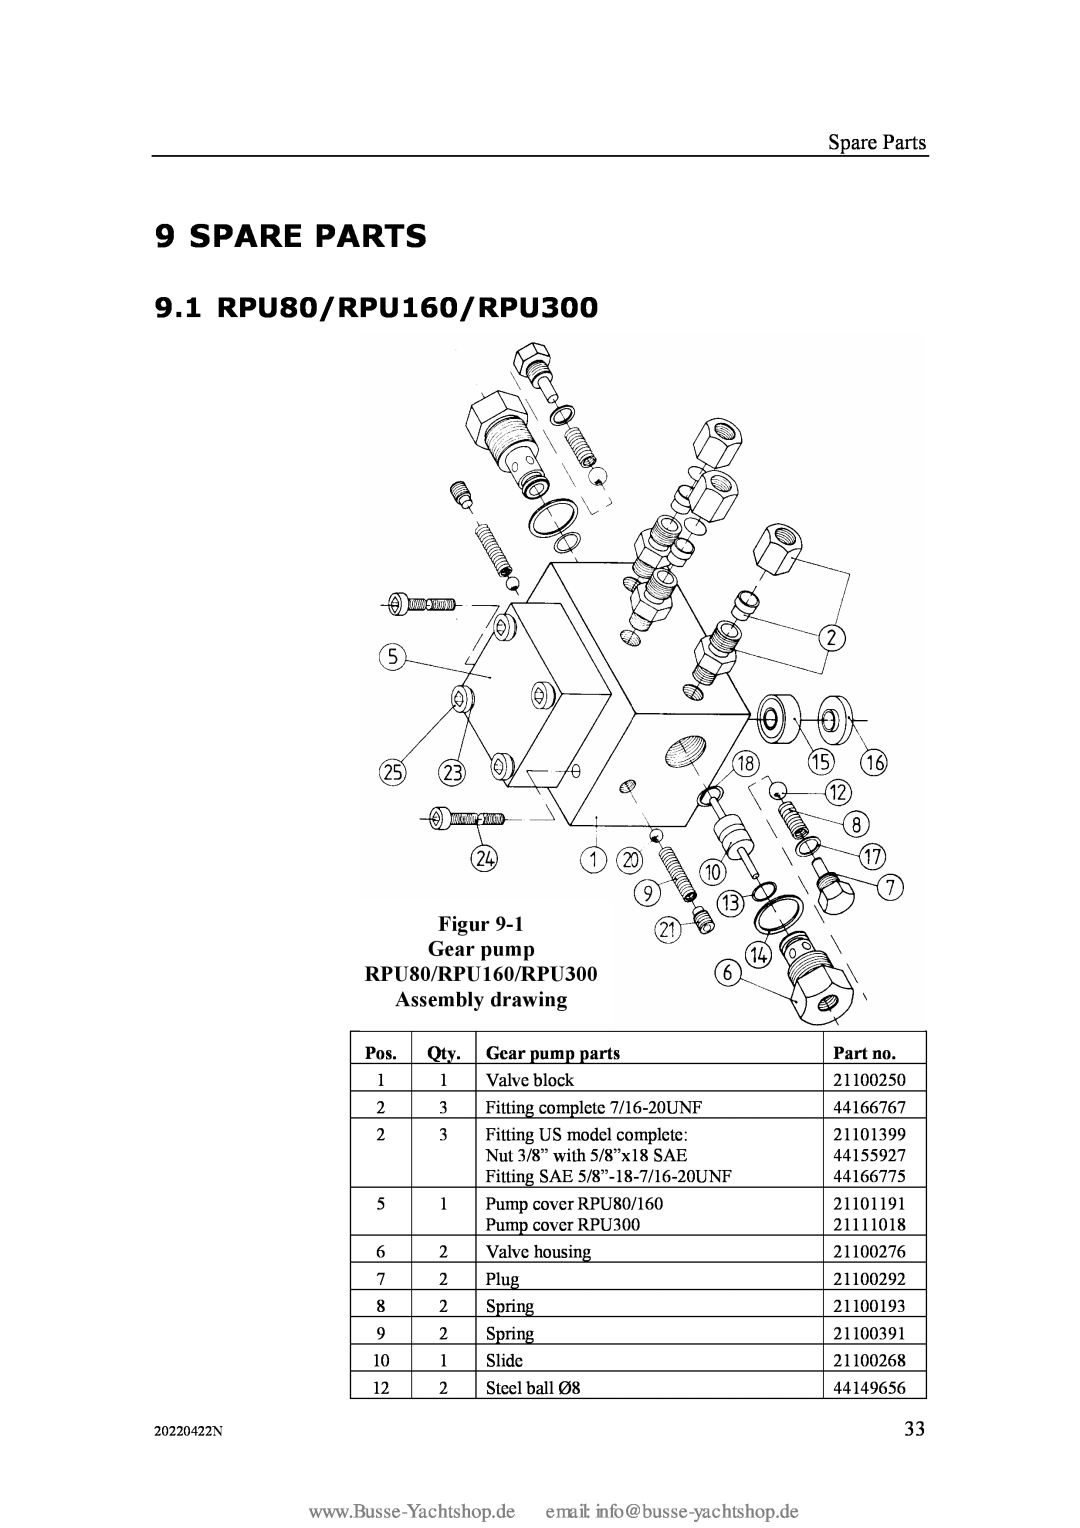 Simran instruction manual Spare Parts, 9.1 RPU80/RPU160/RPU300, Gear pump parts, Part no 